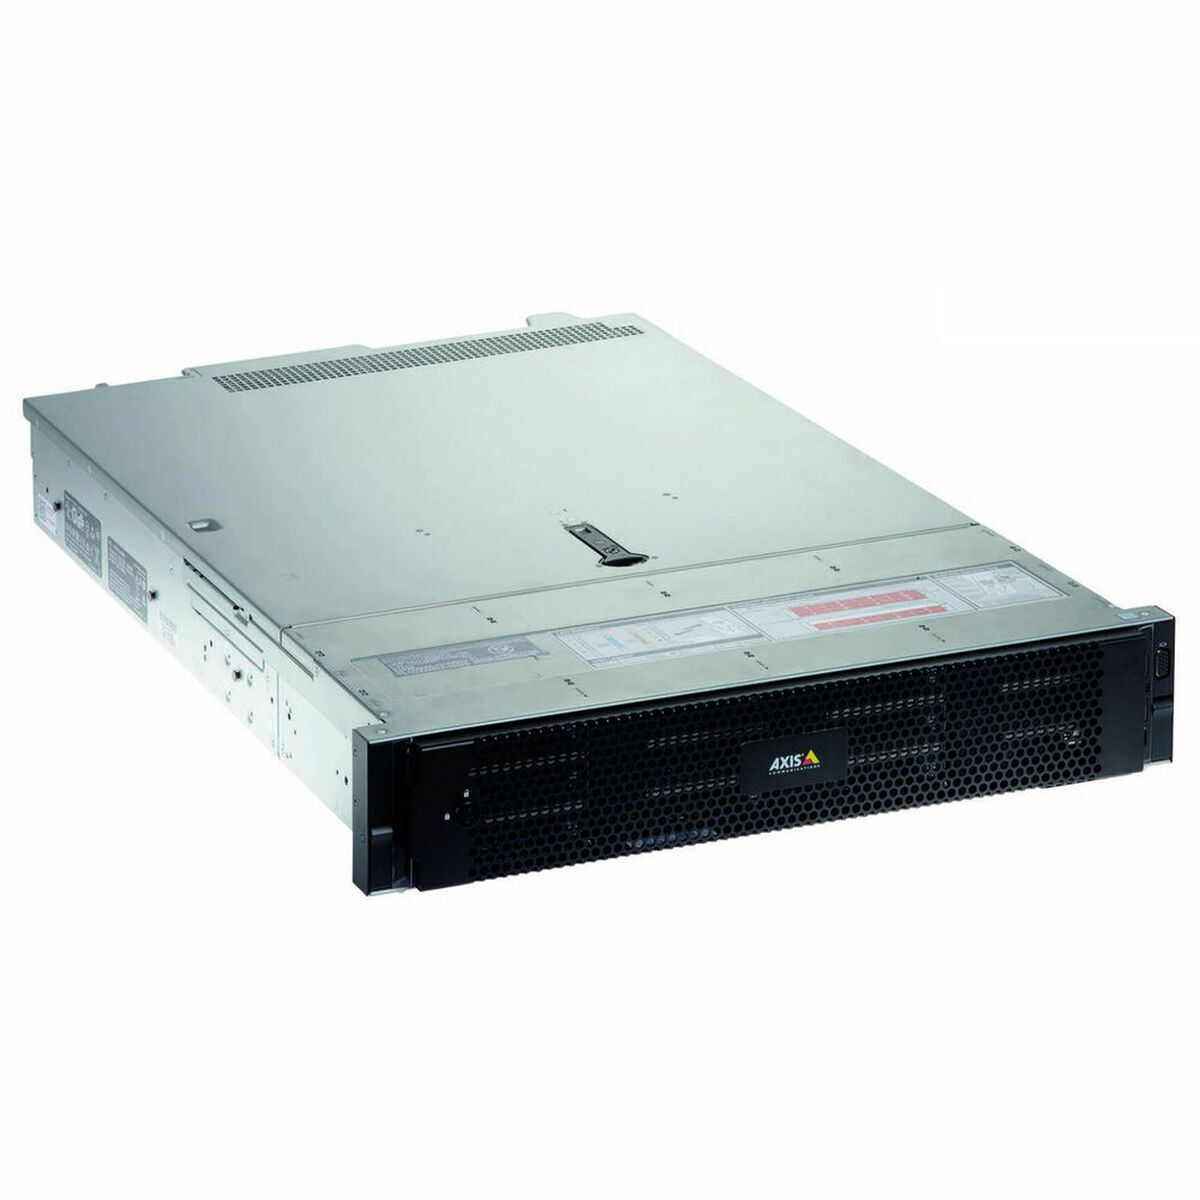 Sieťový videorekordér (NVR) Axis S1148 2U Black, Grey - Sieťový videorekordér (NVR) (64-kanálový, Windows 10 IoT Enterprise, 4000 GB, 40 TB, 24000 GB, 2U)